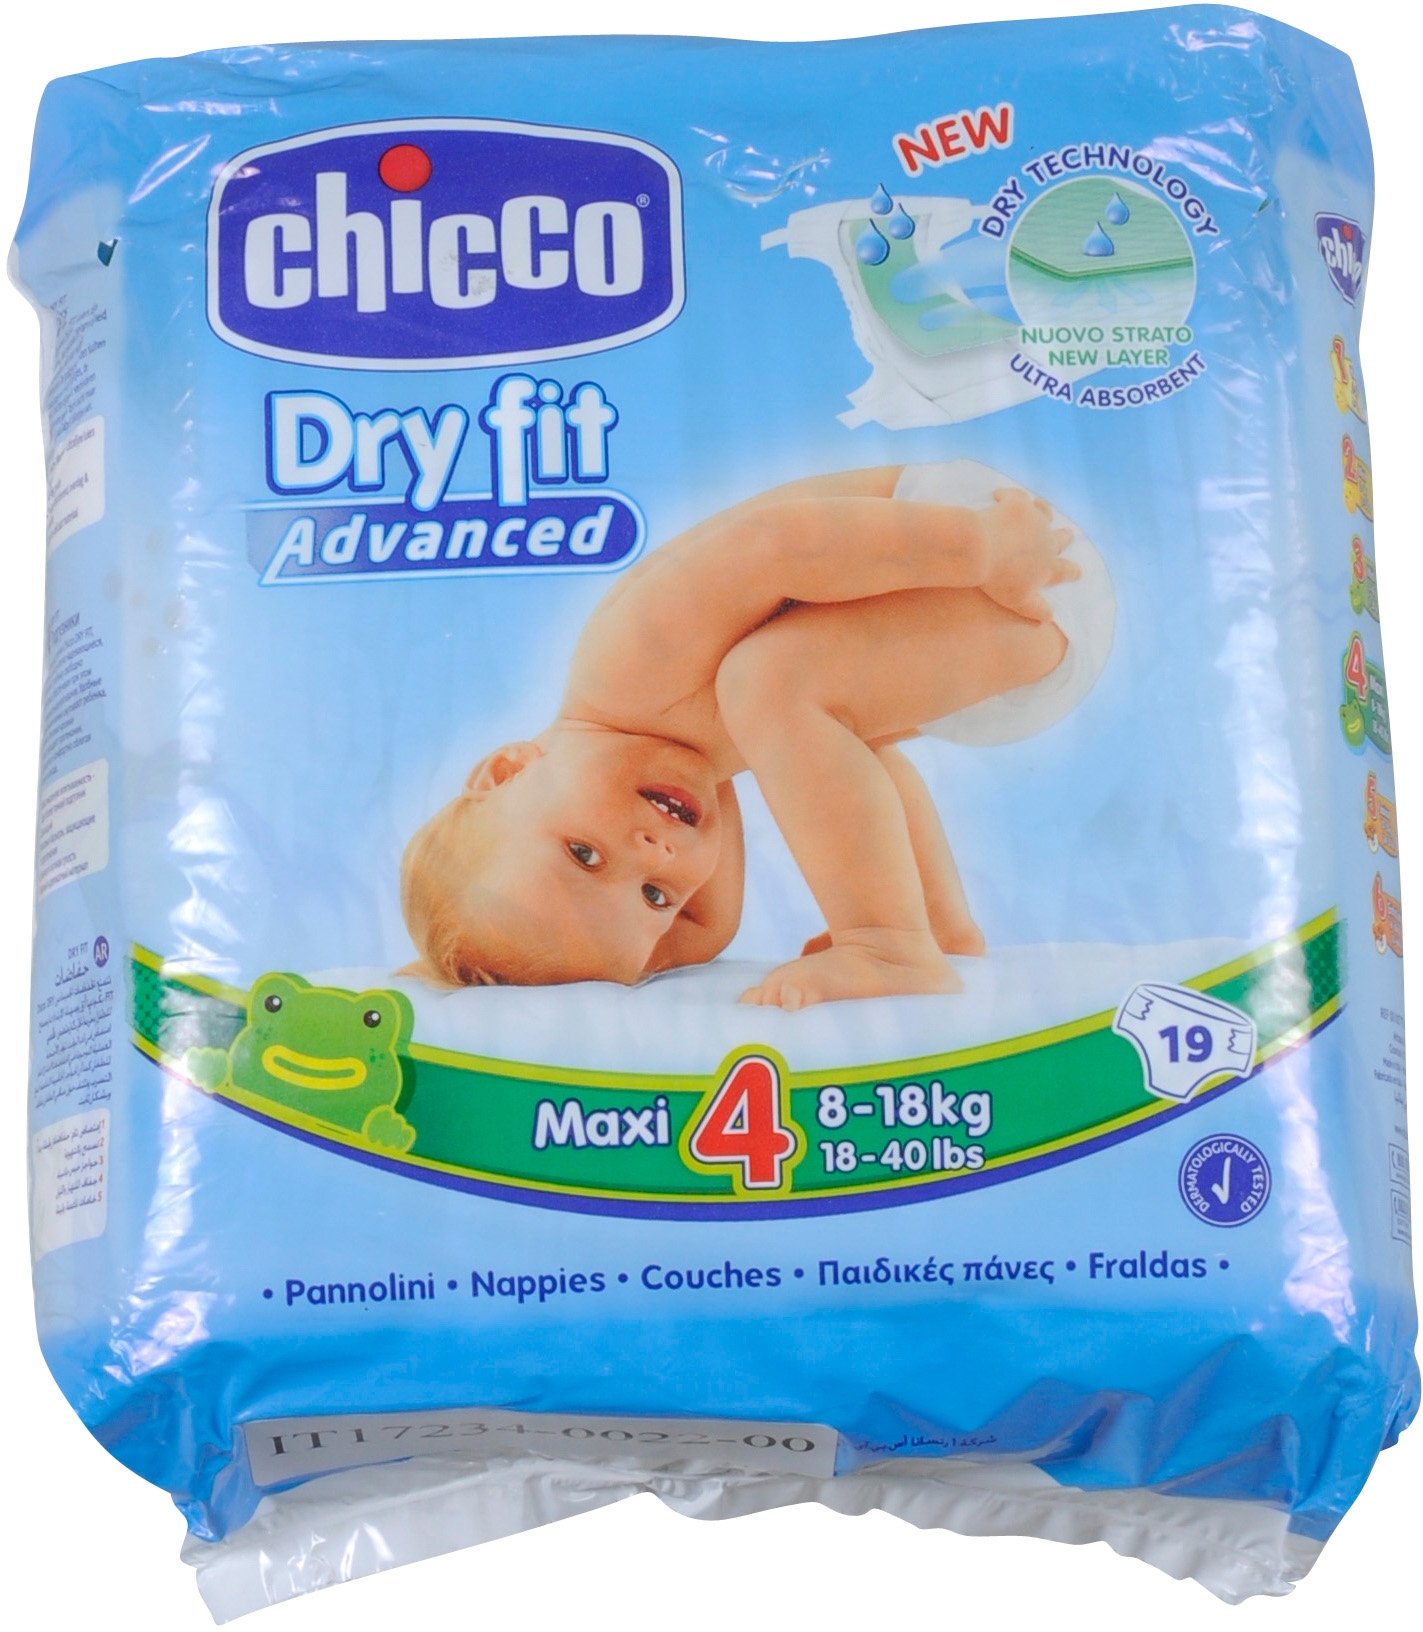 CHICCO Dryfit Advanced